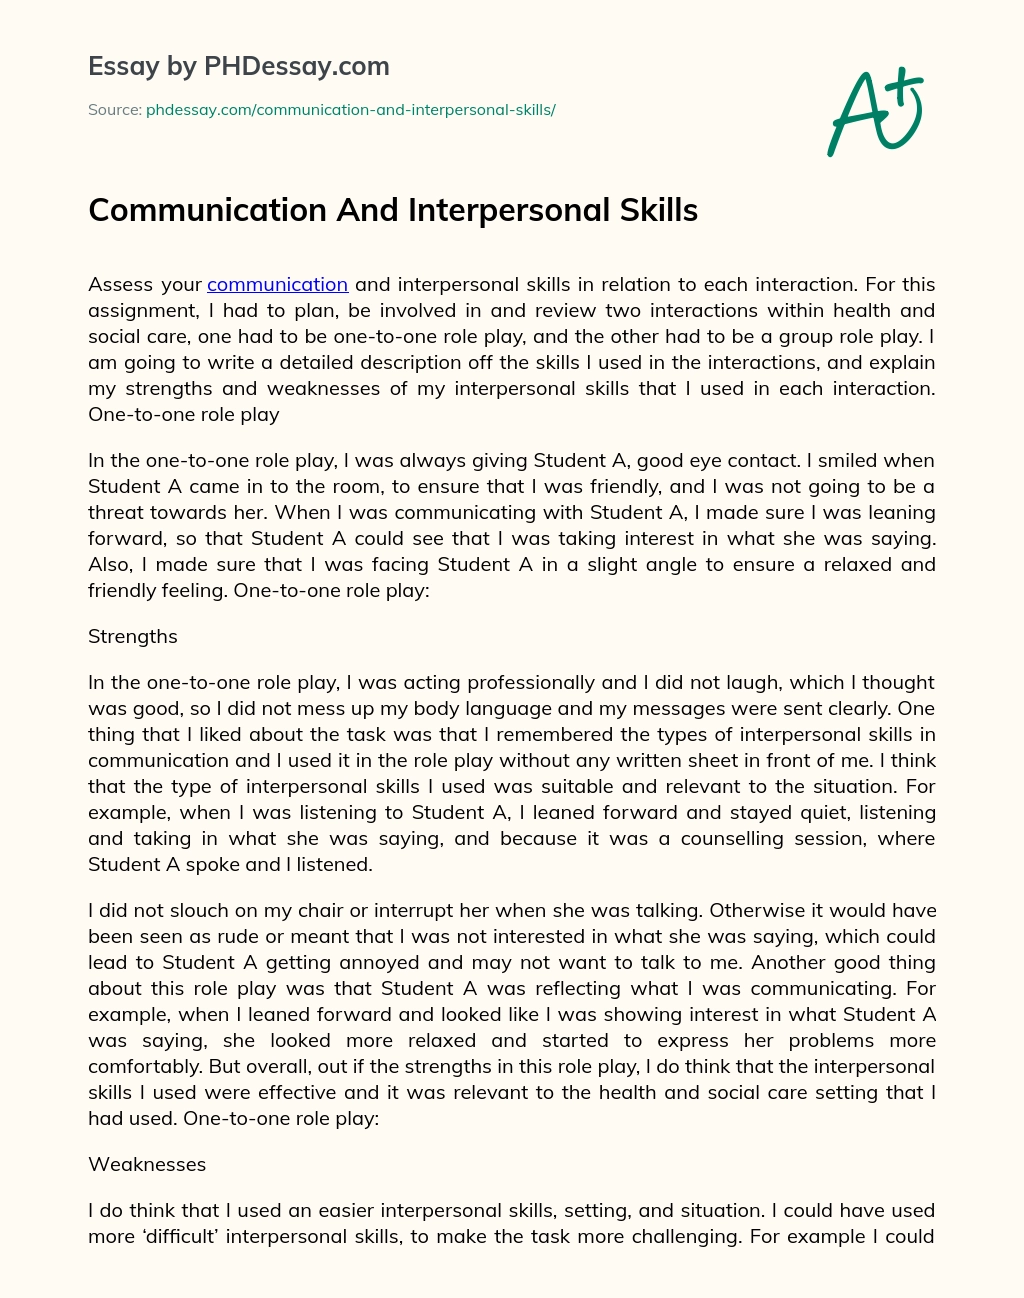 Communication And Interpersonal Skills essay